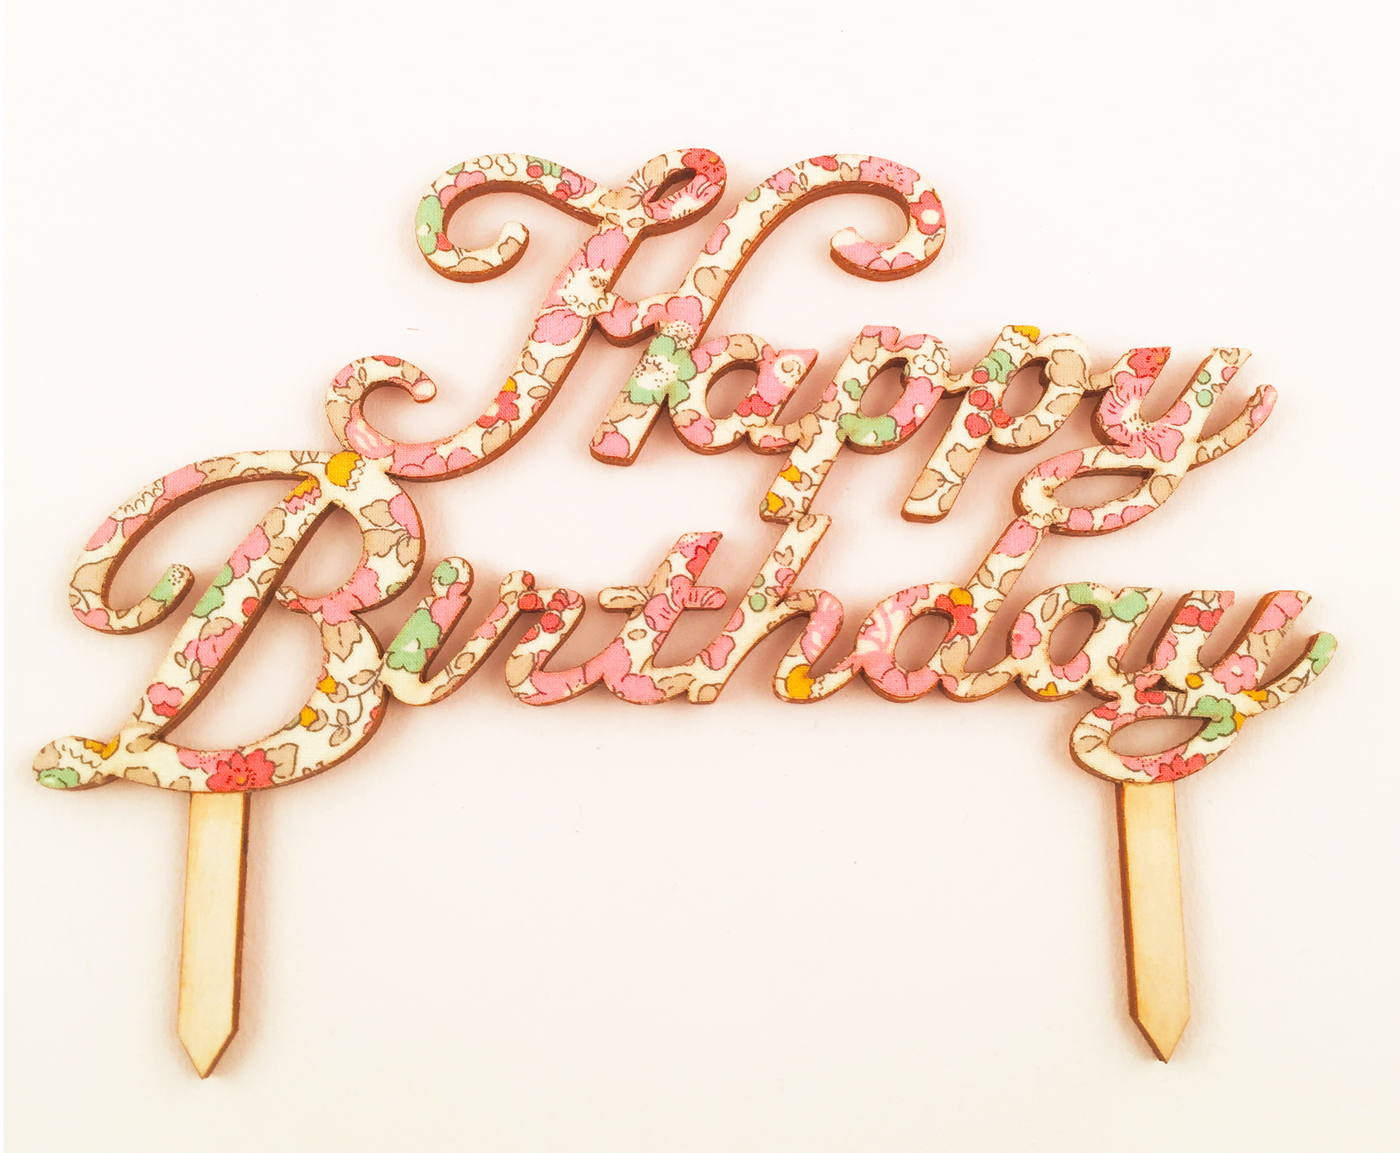 Betsy Ann Liberty of London Happy Birthday Cake Topper